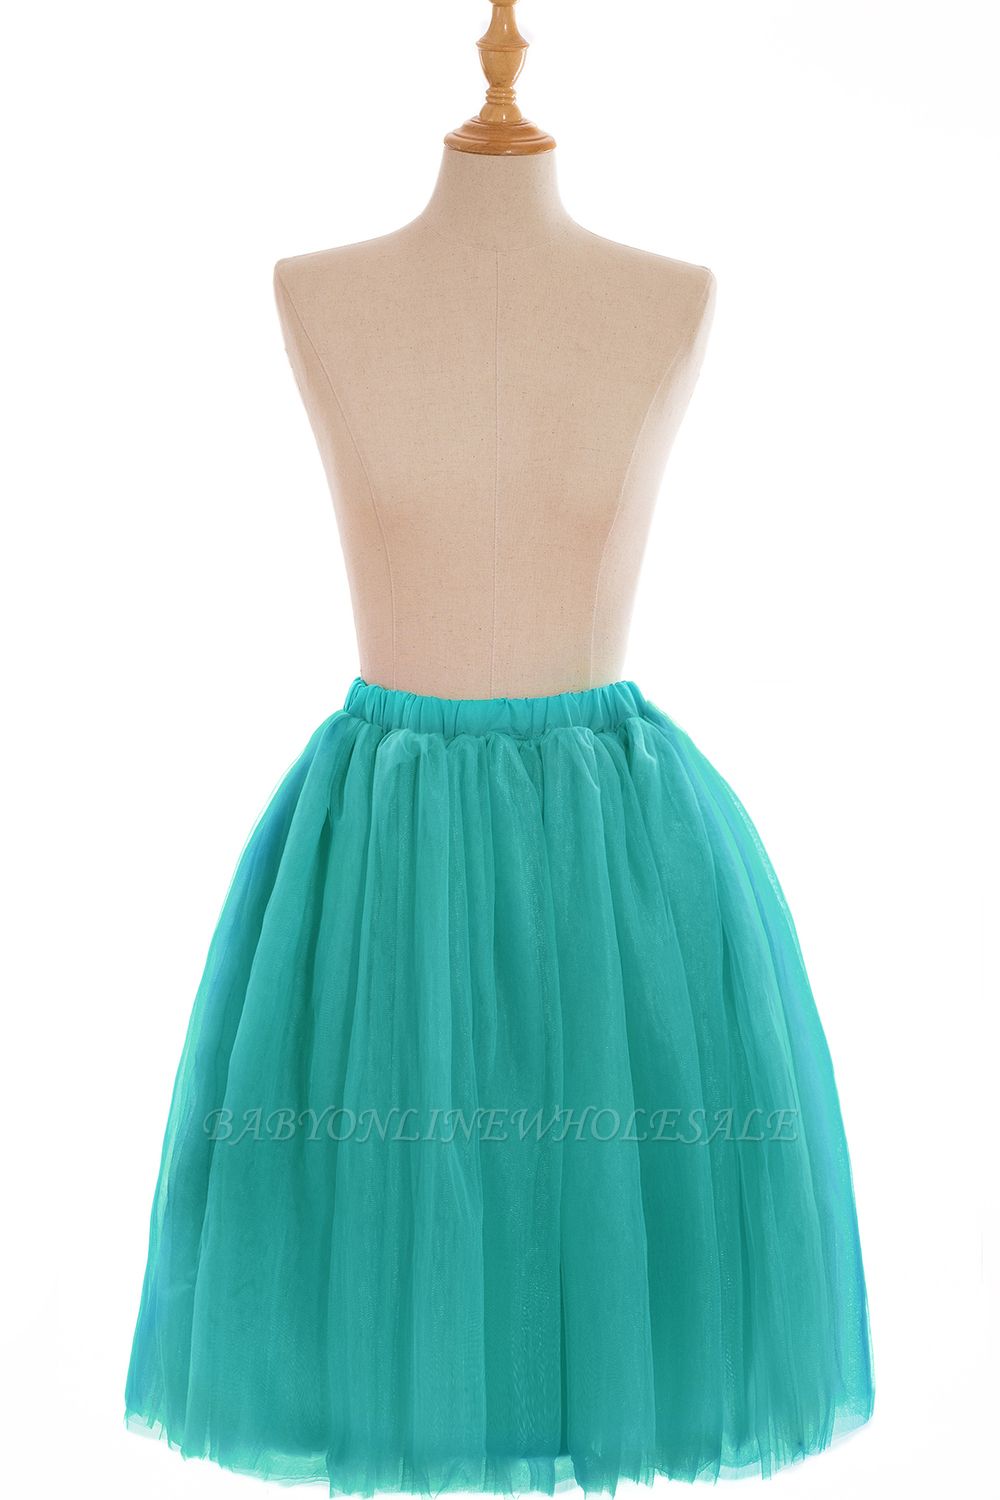 Nifty Short A-line Mini Skirts | Elastic Women's Skirts